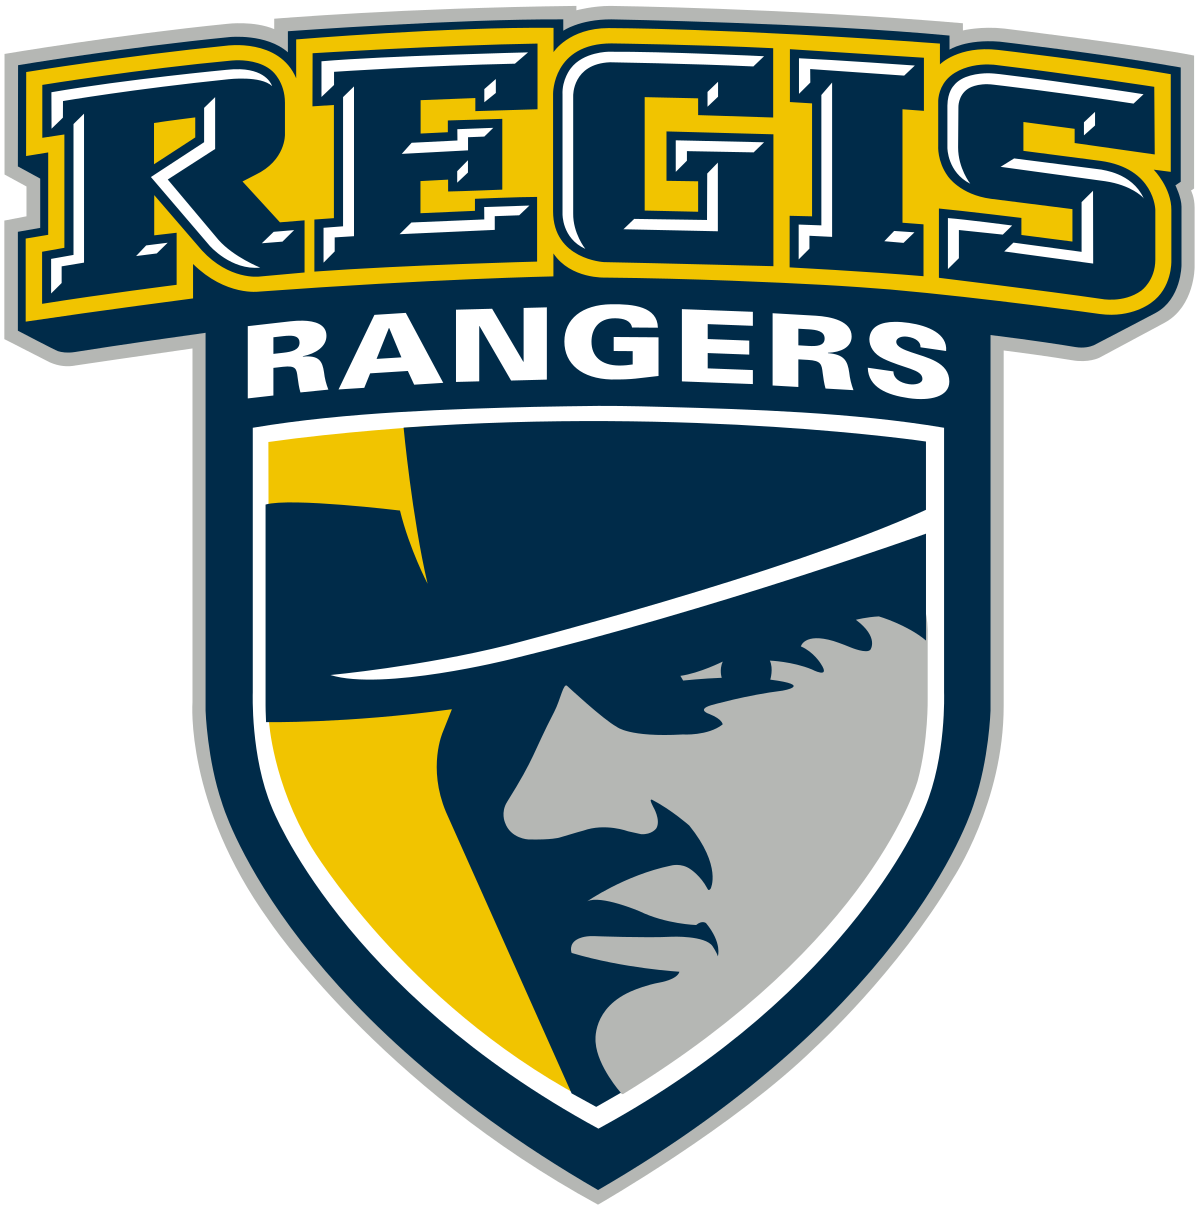 Regis Rangers logo svg